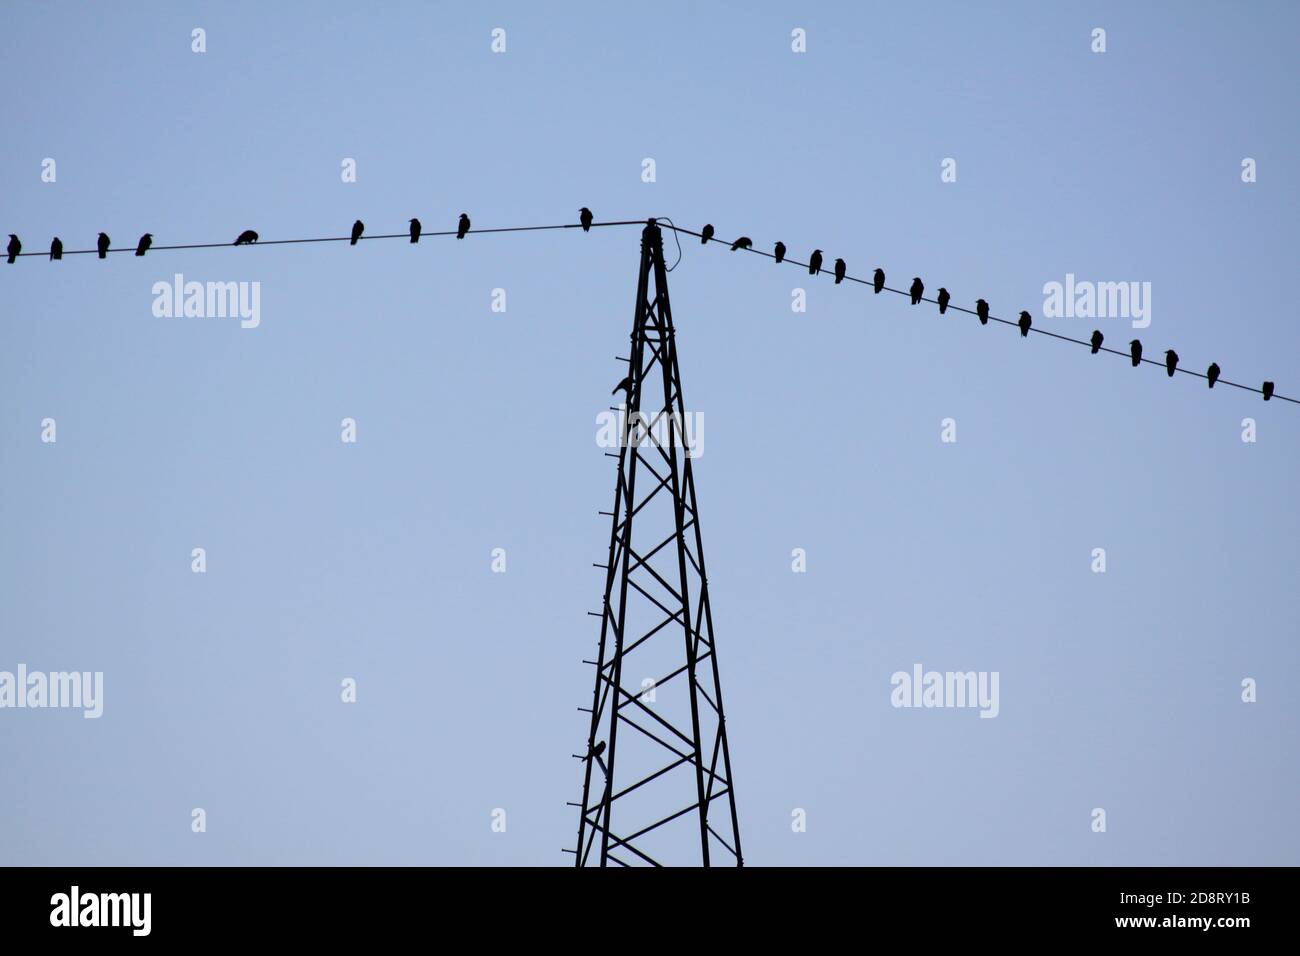 Birds on wire Stock Photo